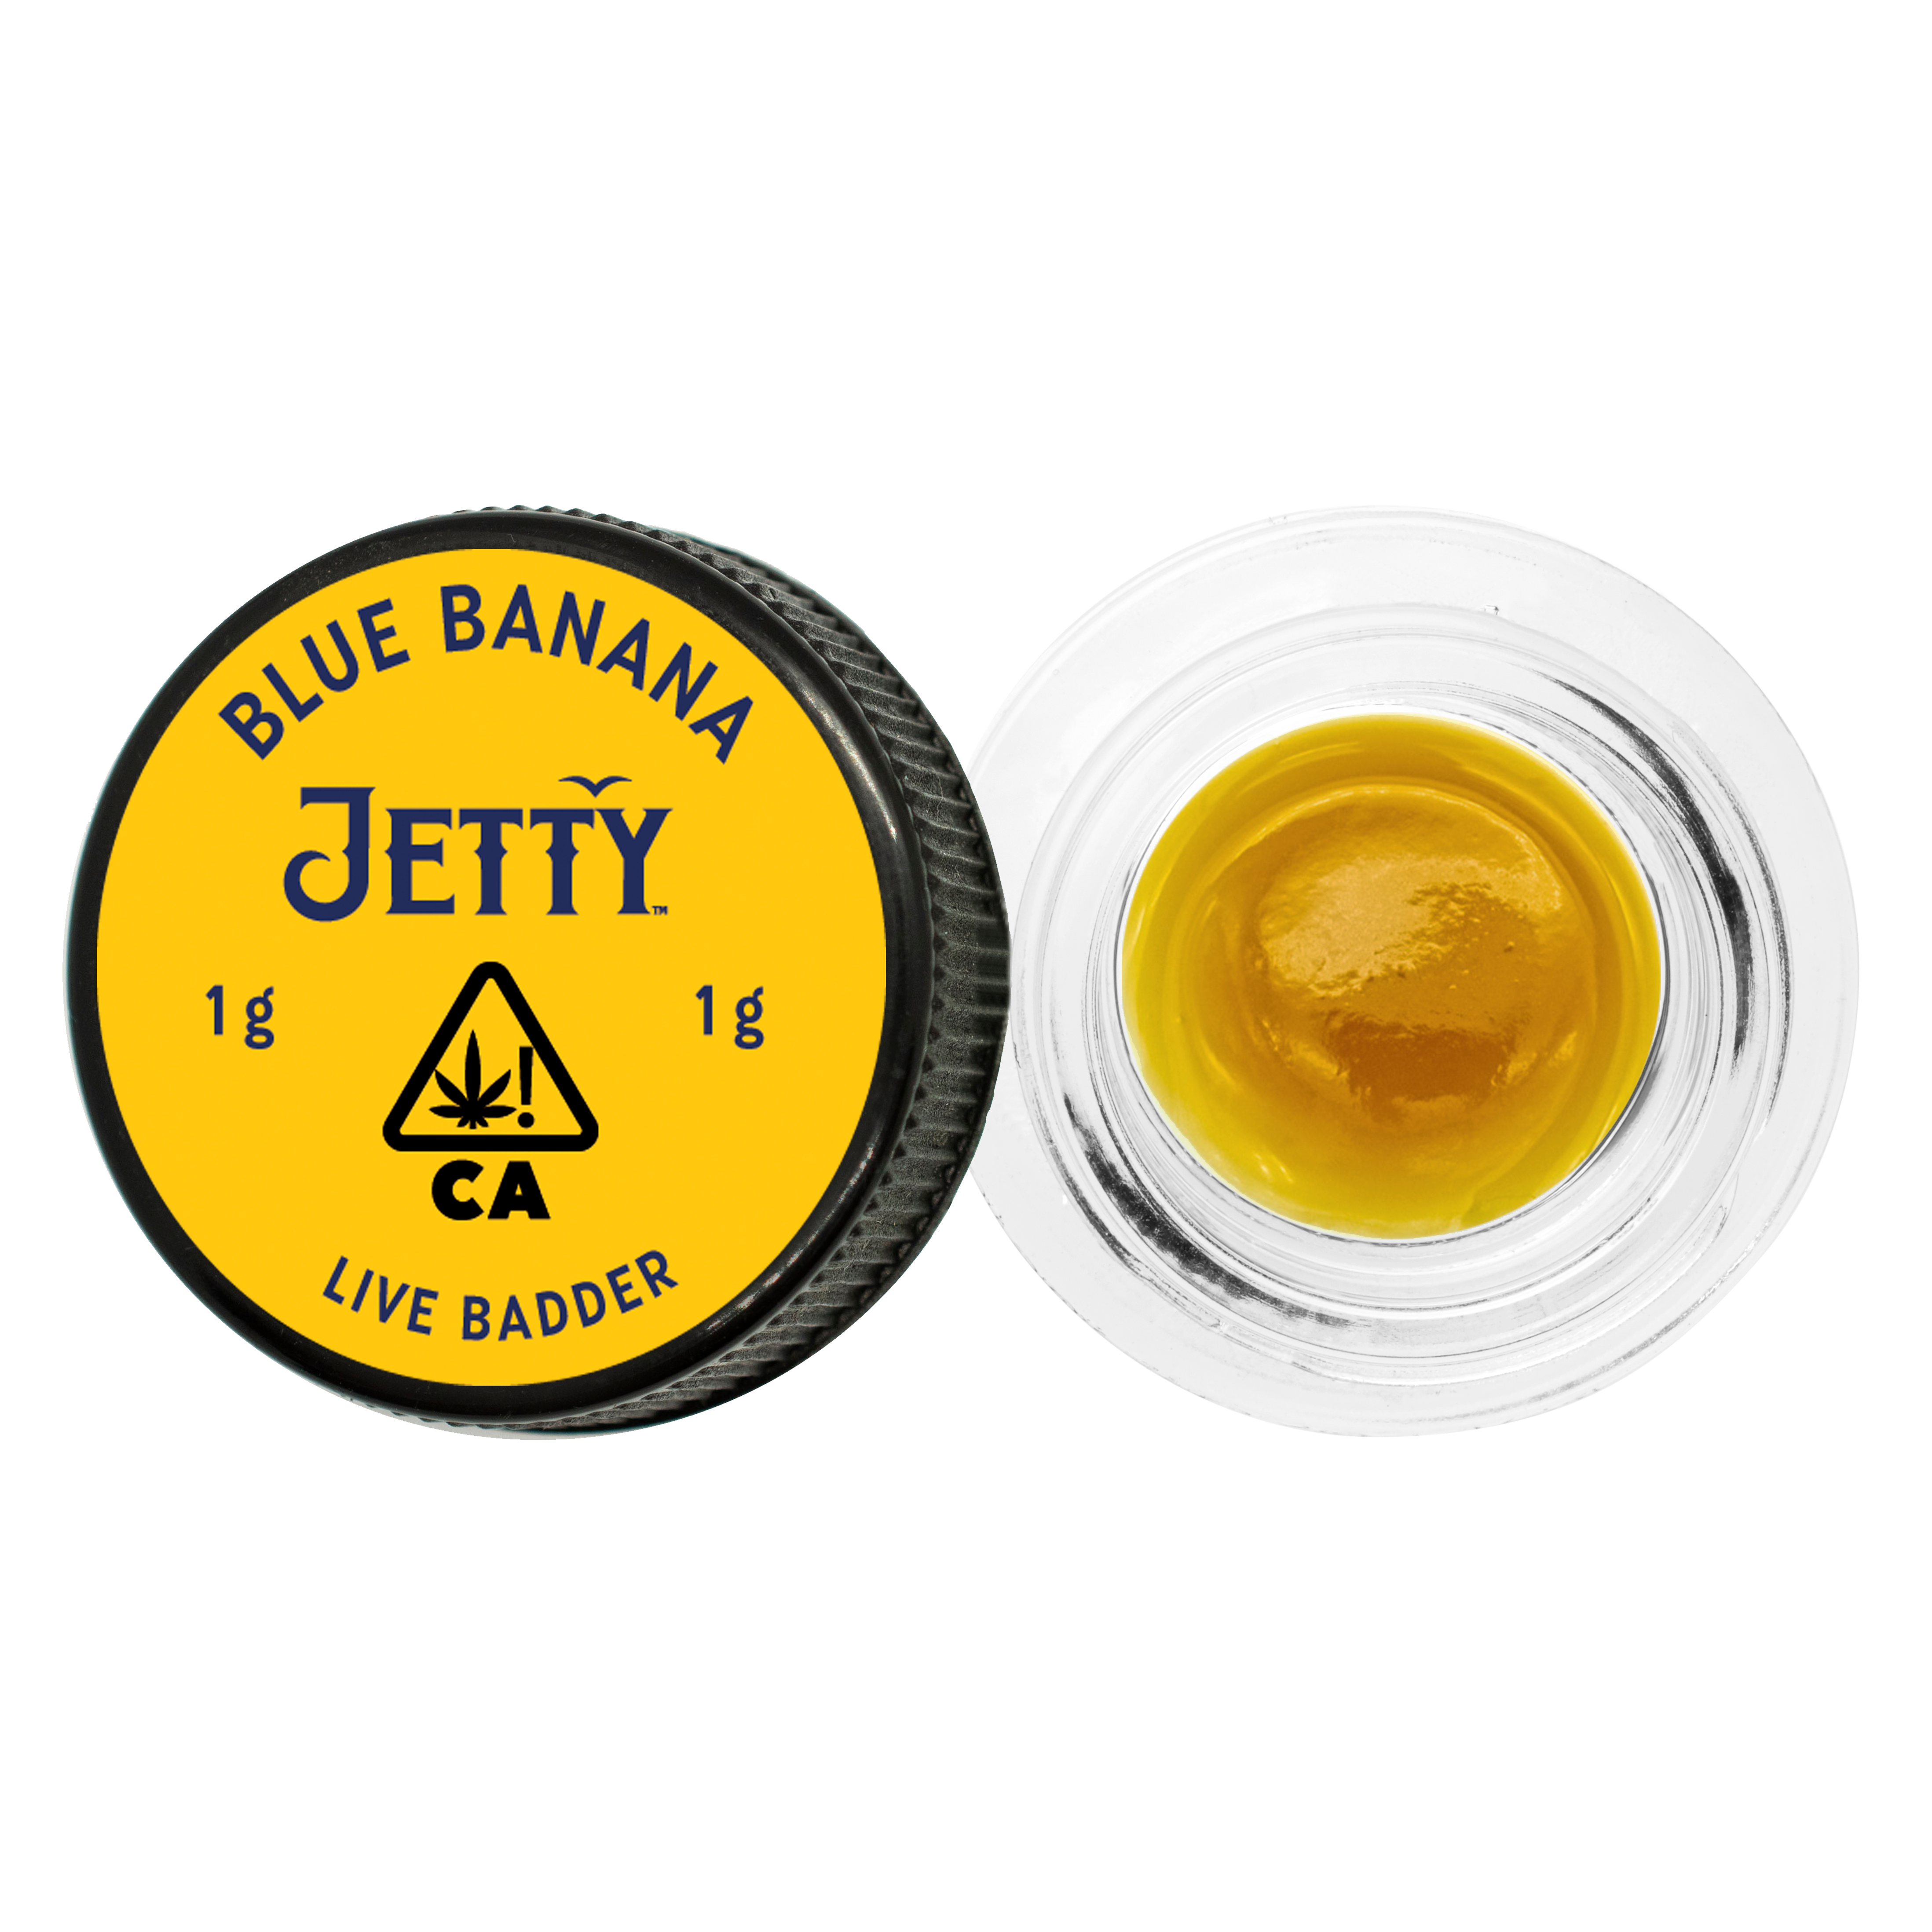 A photograph of Jetty Live Badder 1g Blue Banana